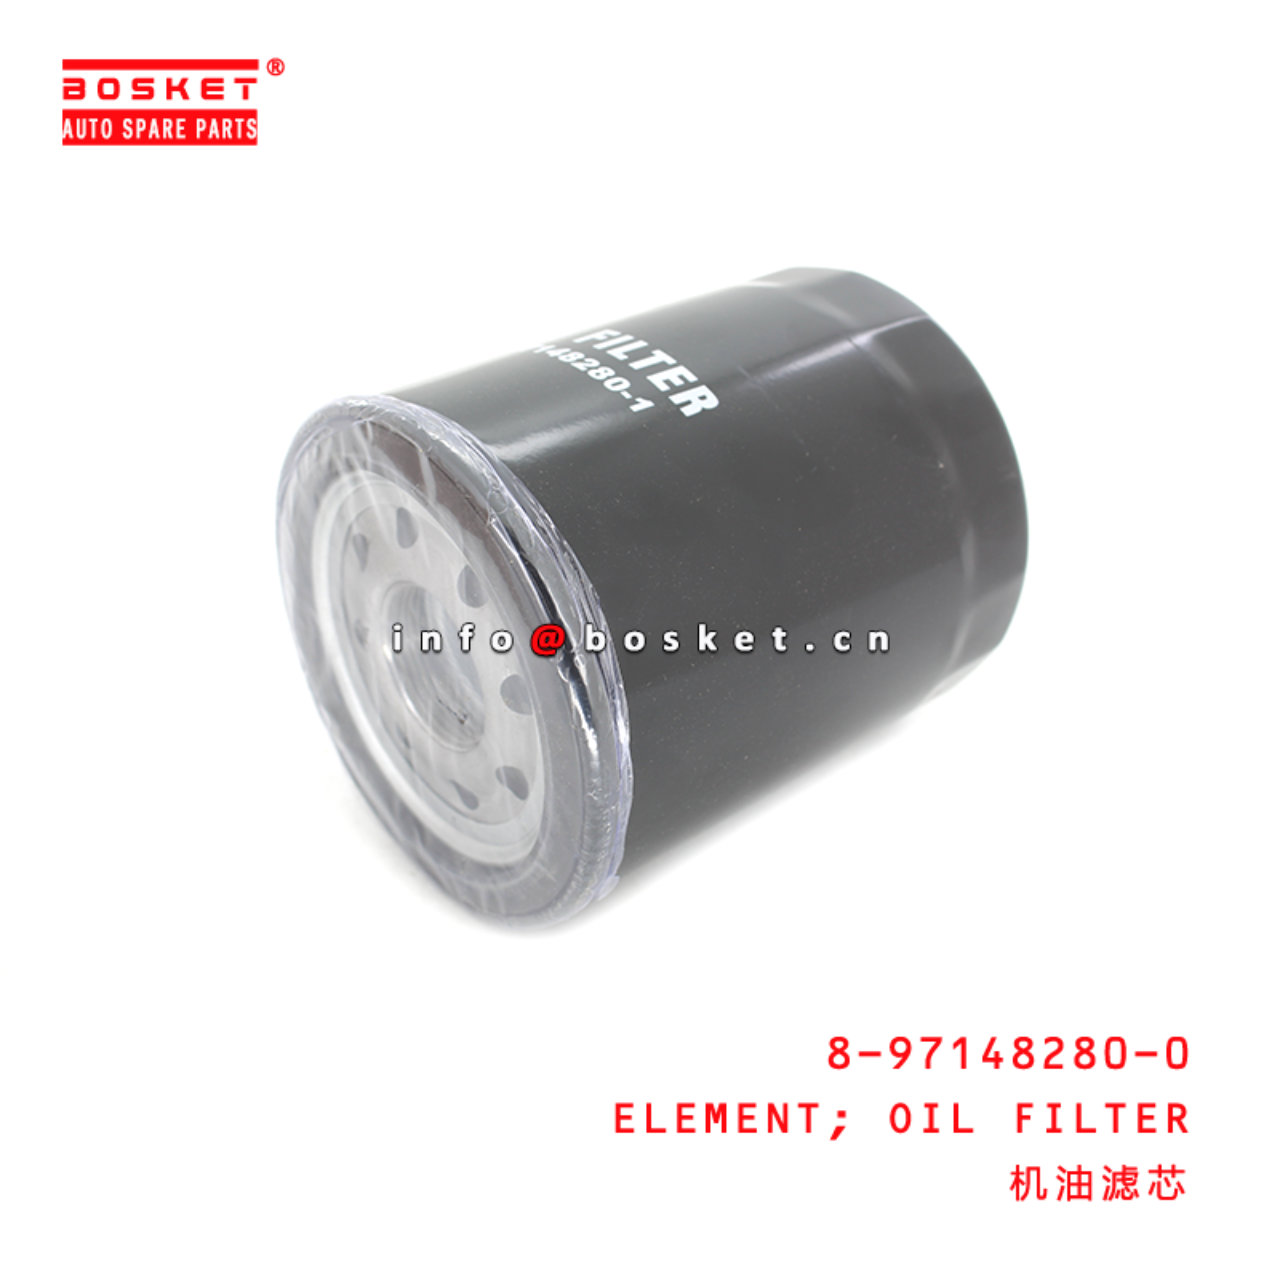 8-97148280-0 Oil Filter Element Suitable for ISUZU FSR 8971482800